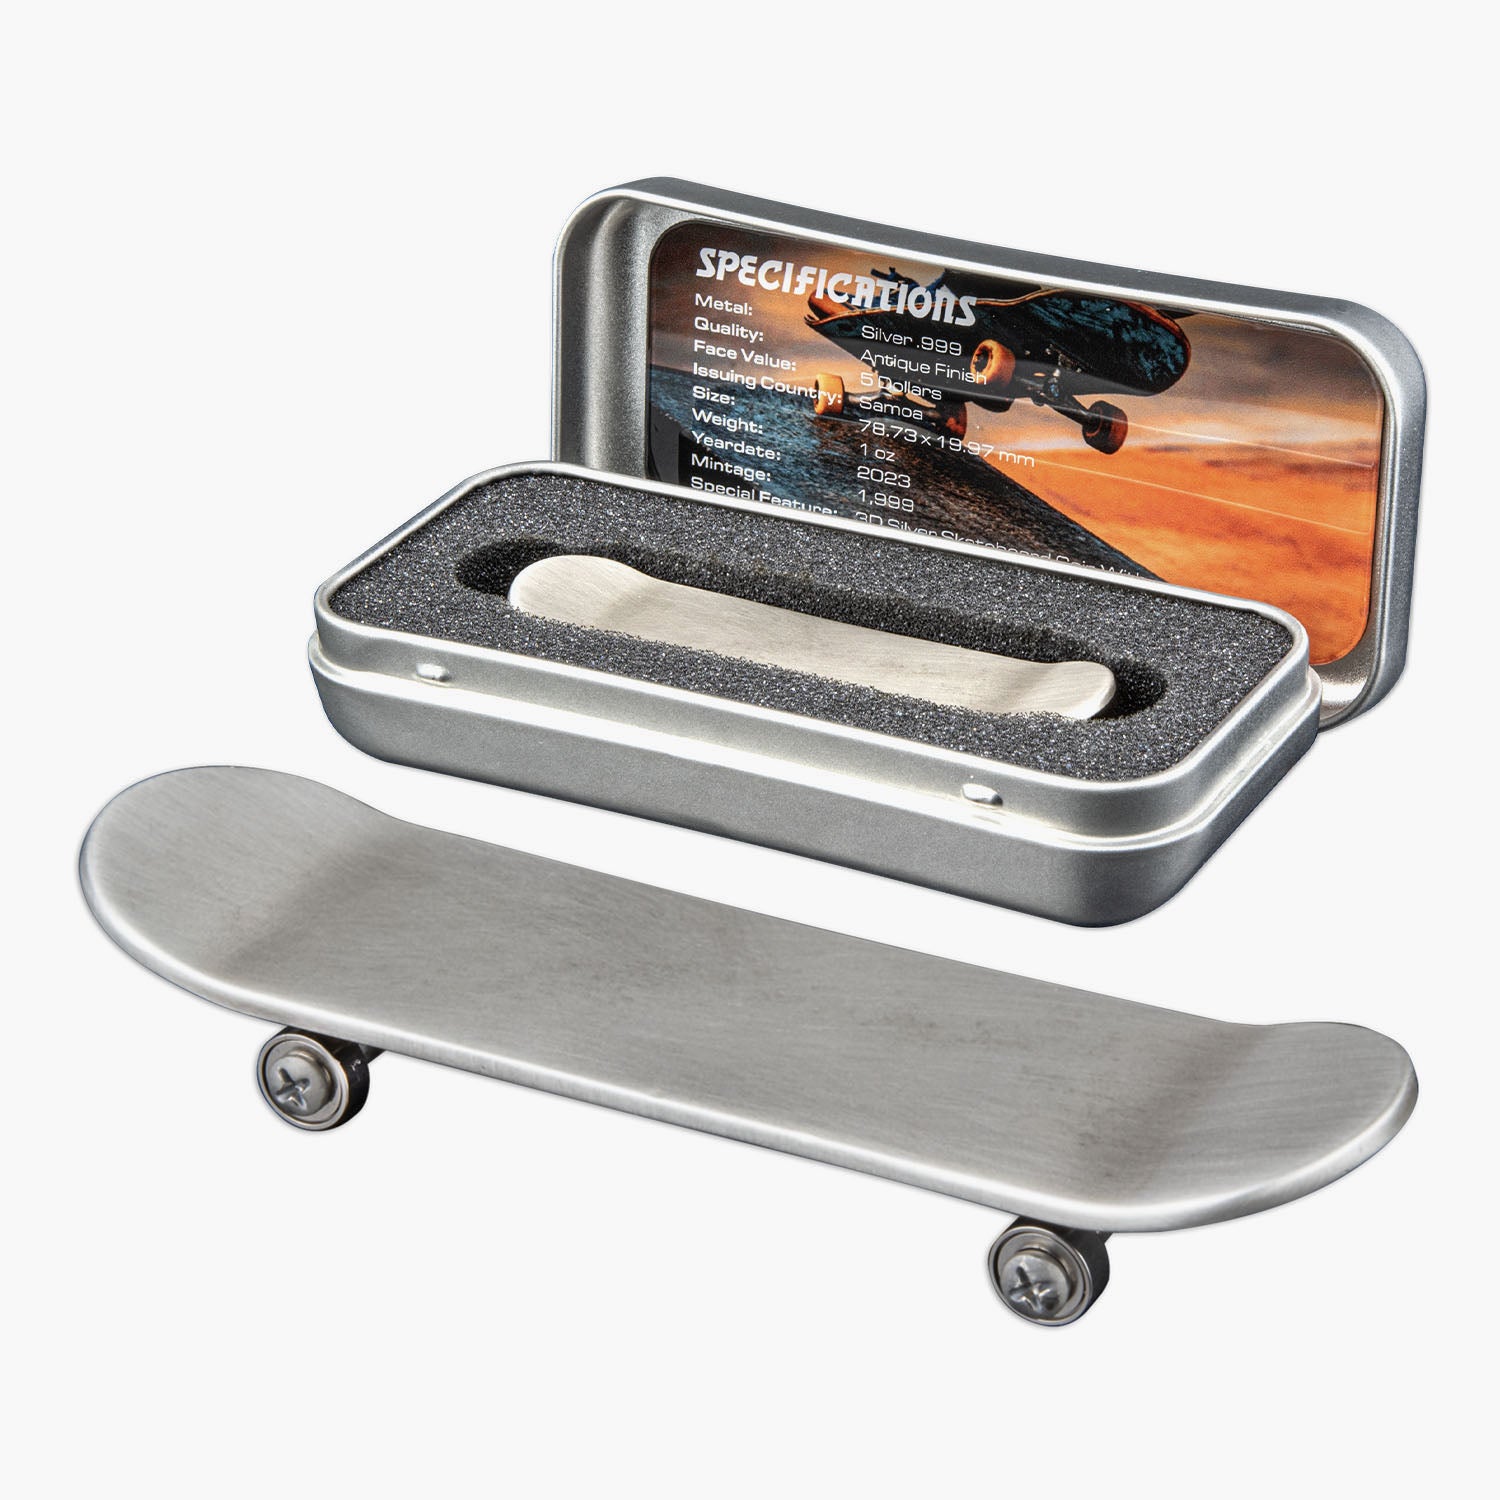 3D Skateboard 2023 1oz solid Silver Coin